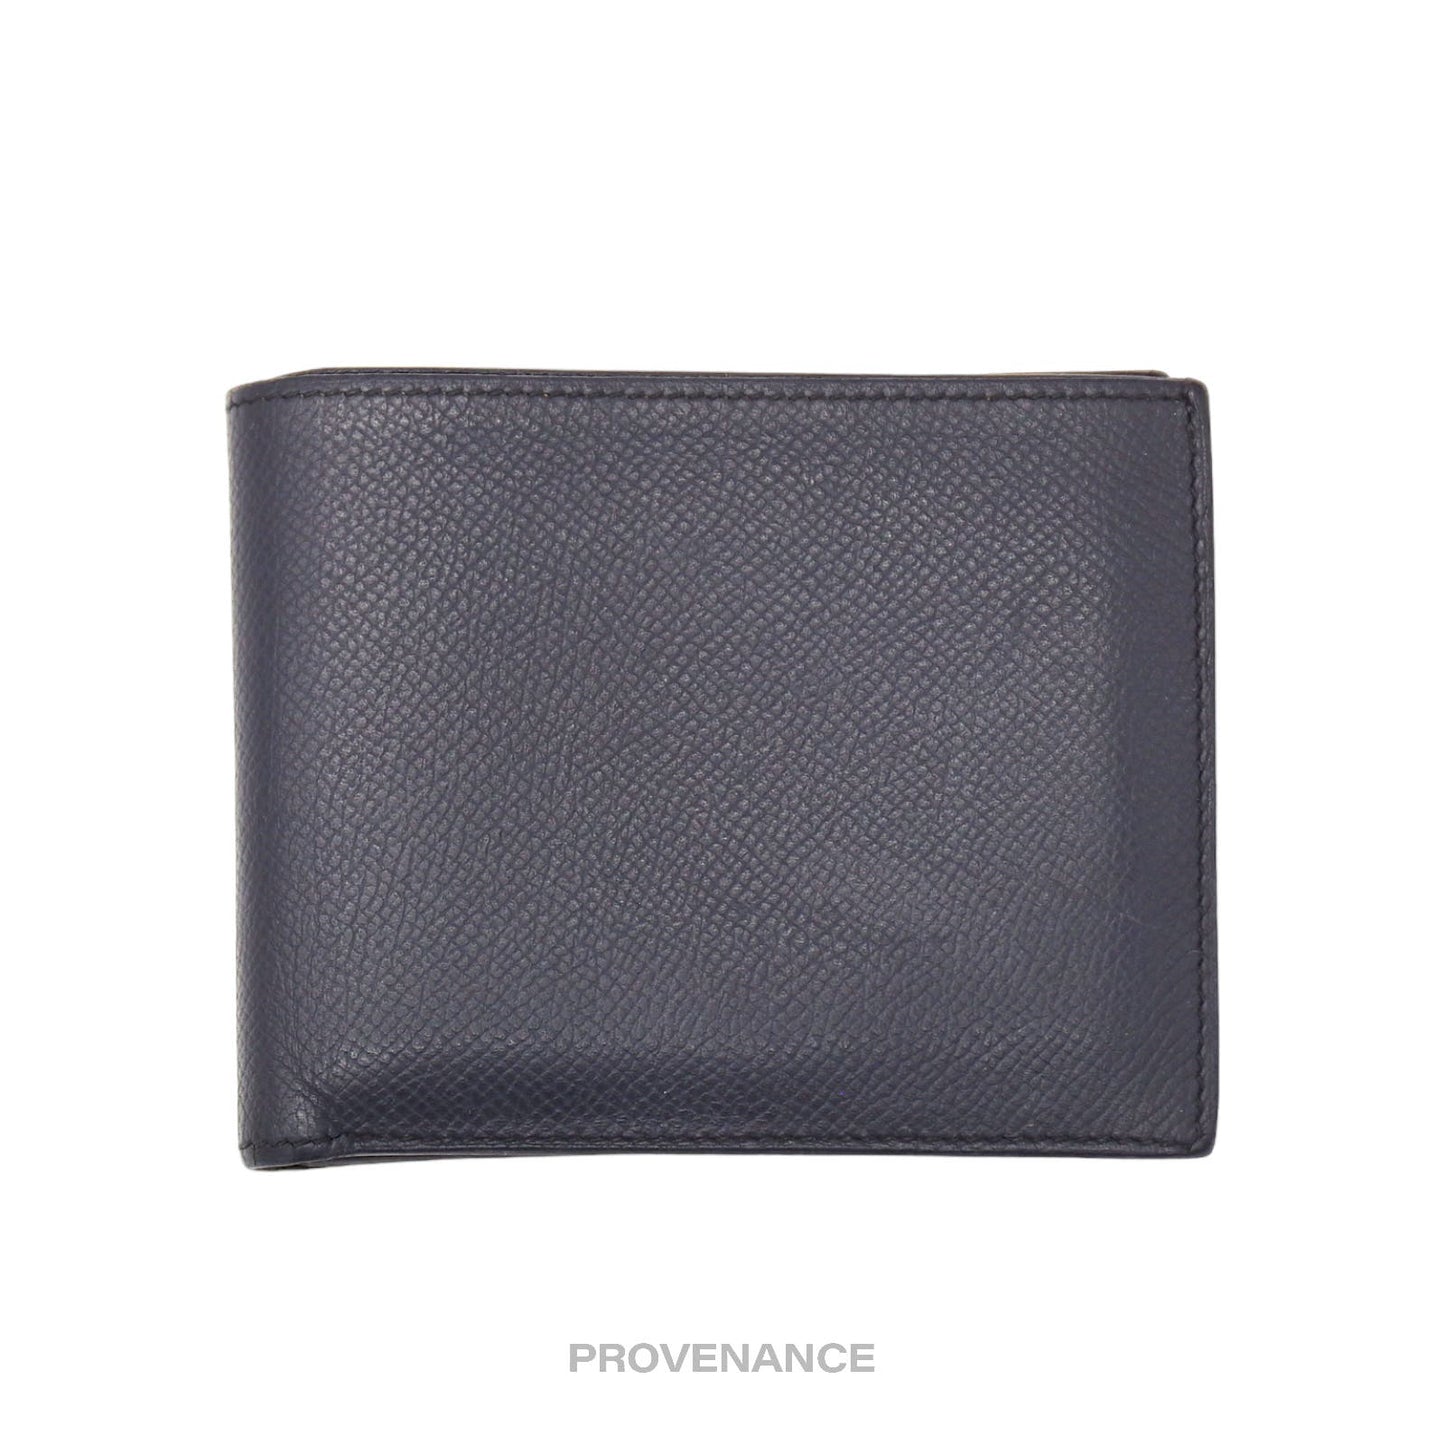 🔴 Hermes Citizen Twill Compact Wallet - Bleu Nuit Epsom